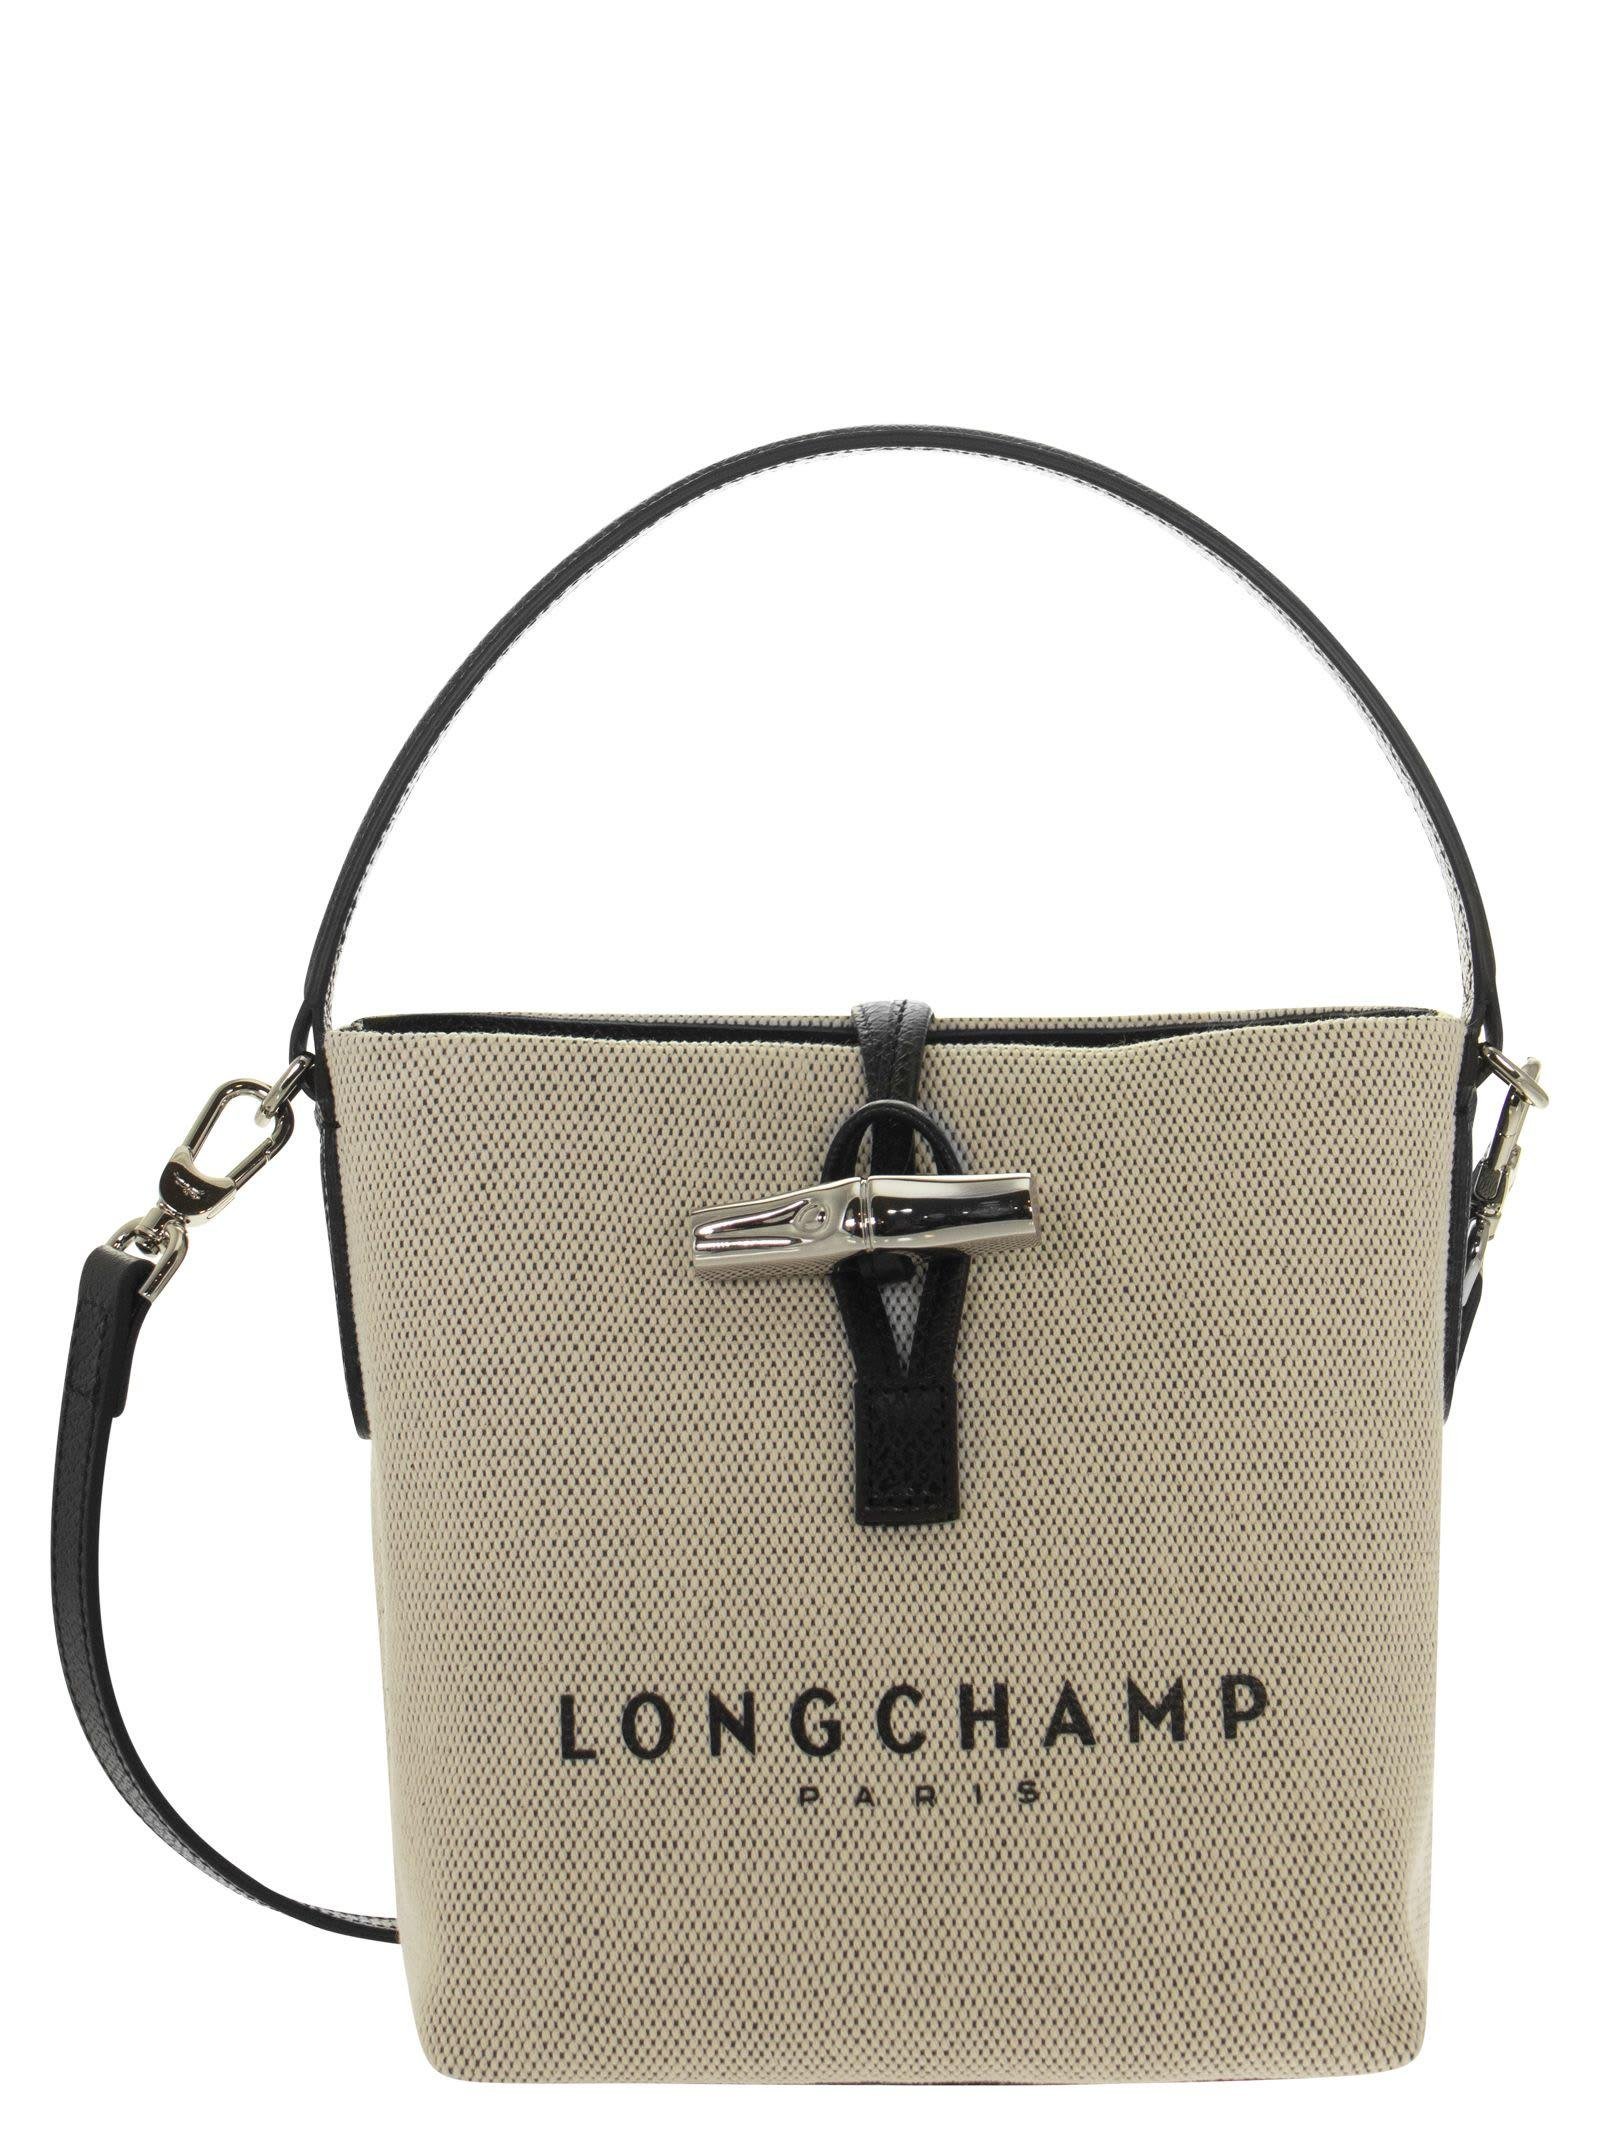 longchamp bag price